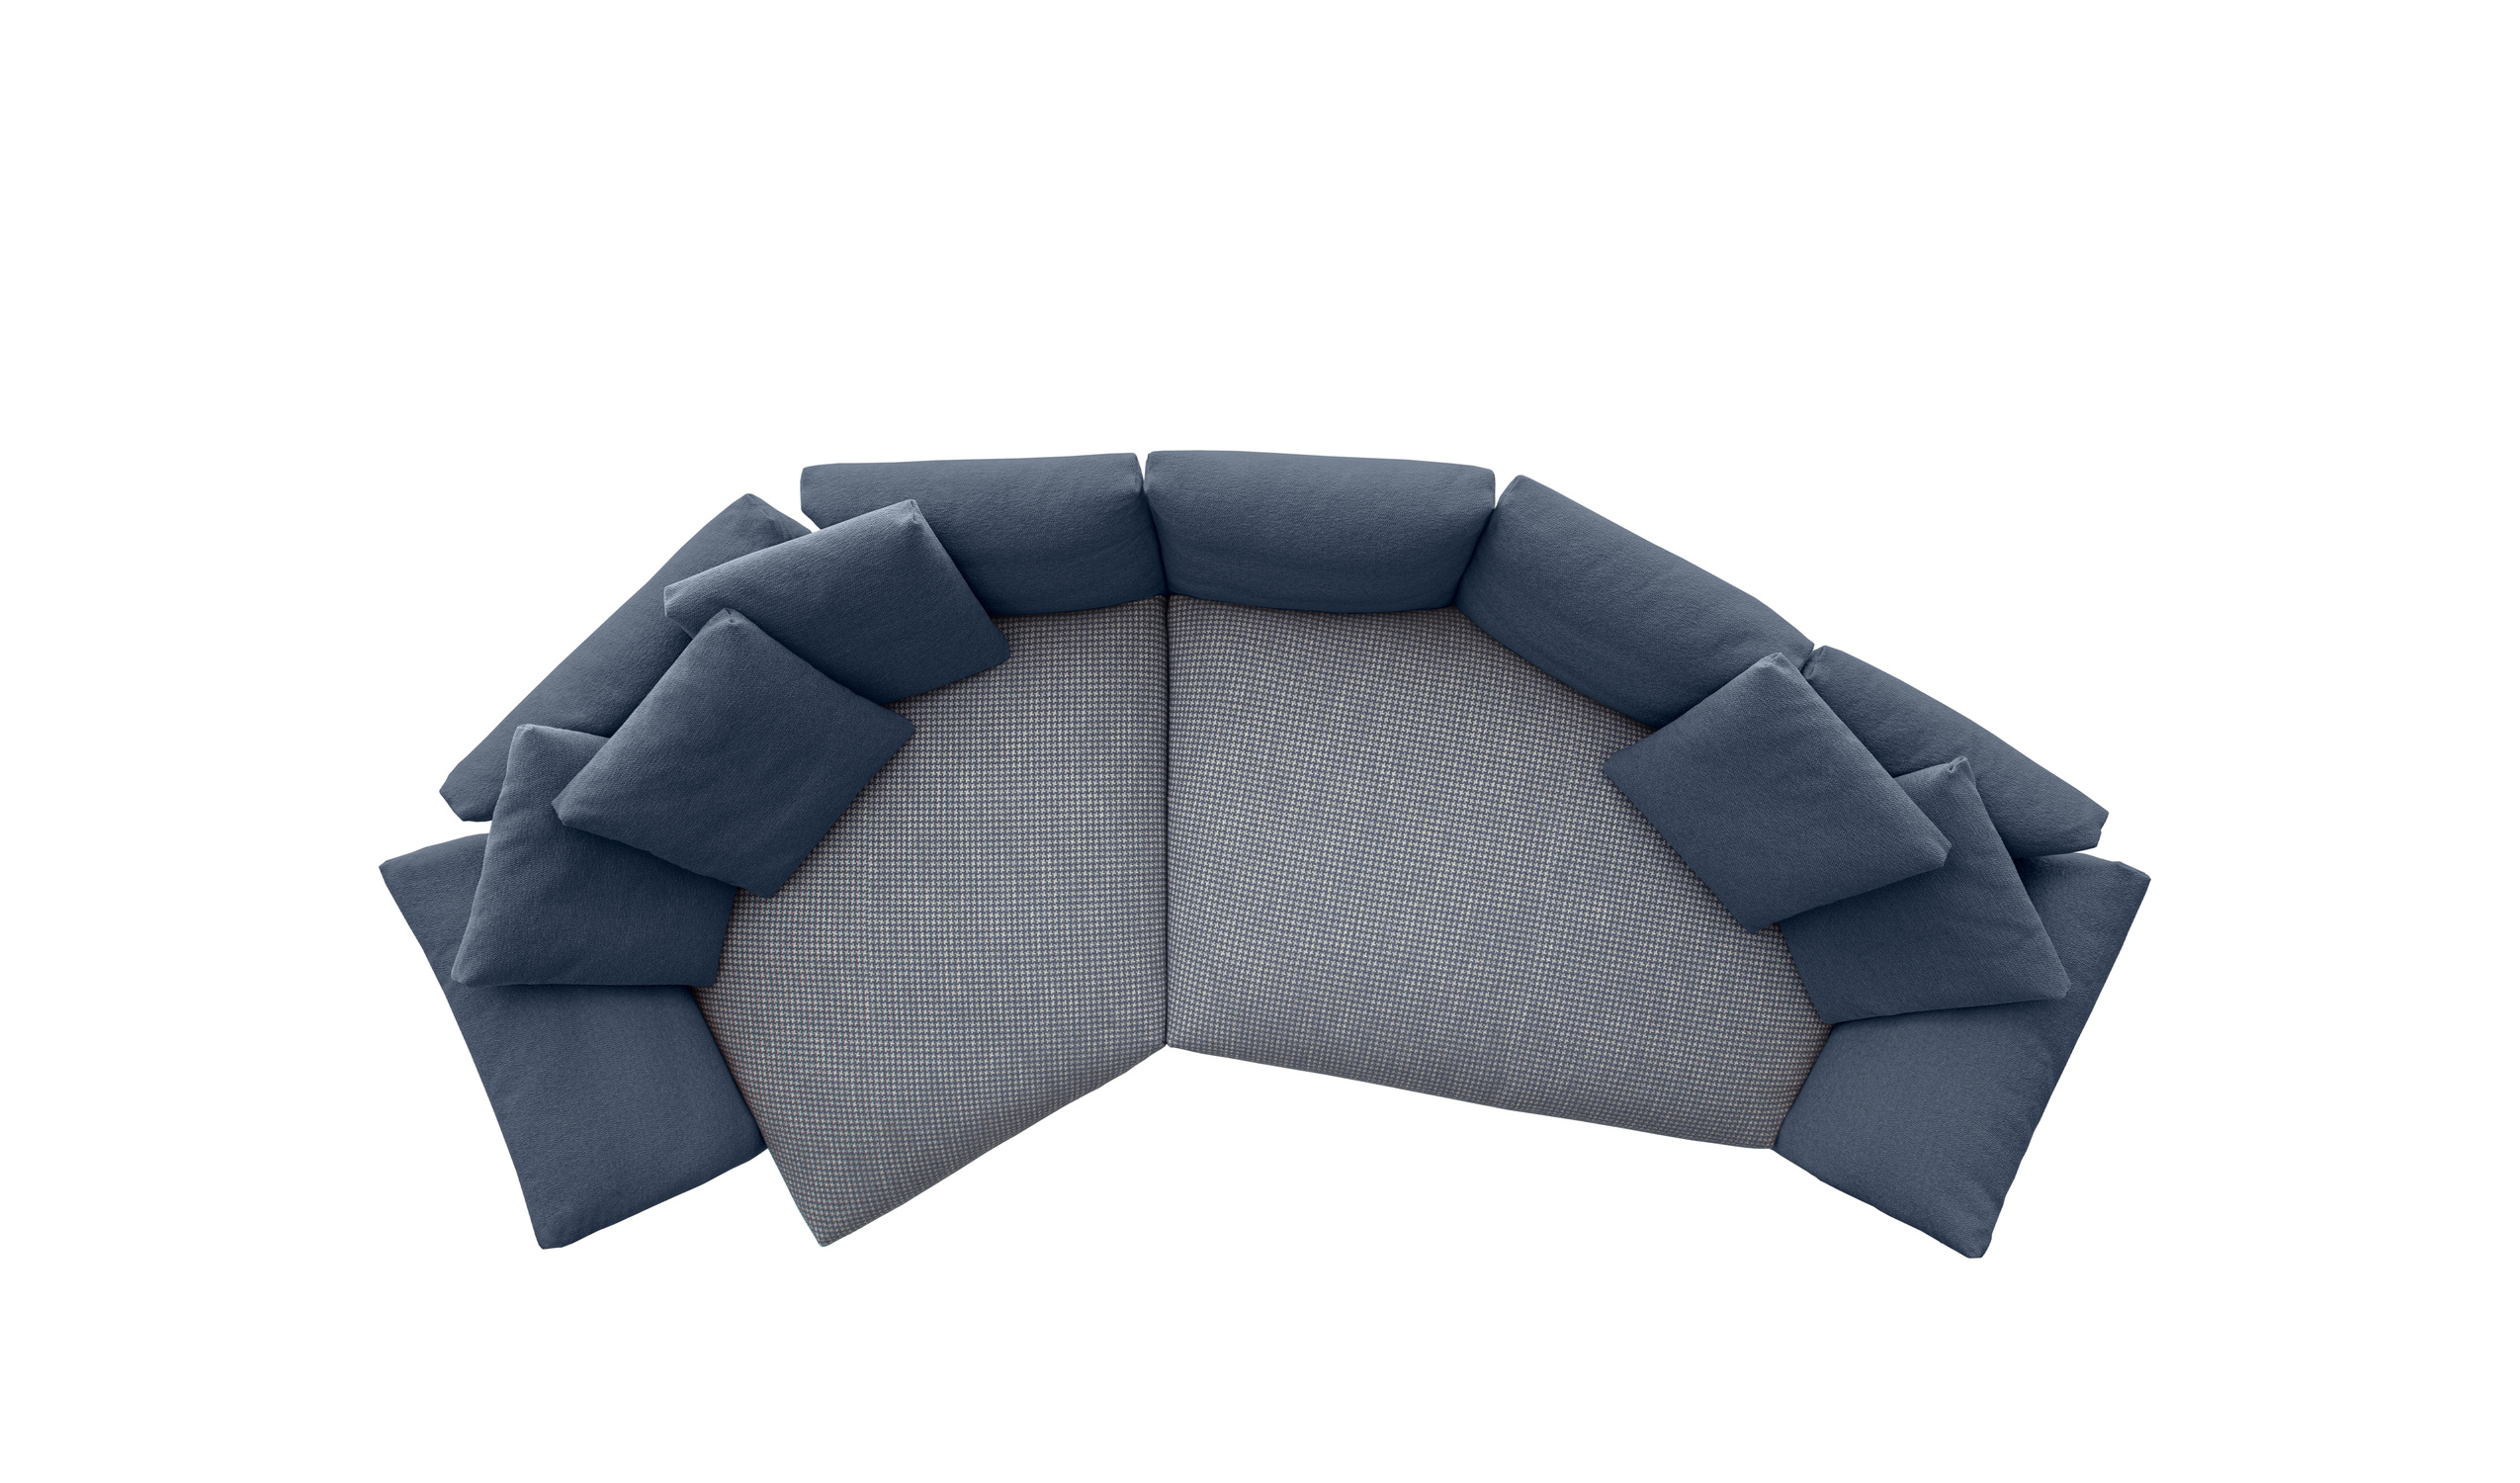 Modern designer italian sofas - Dambo Sofas 4